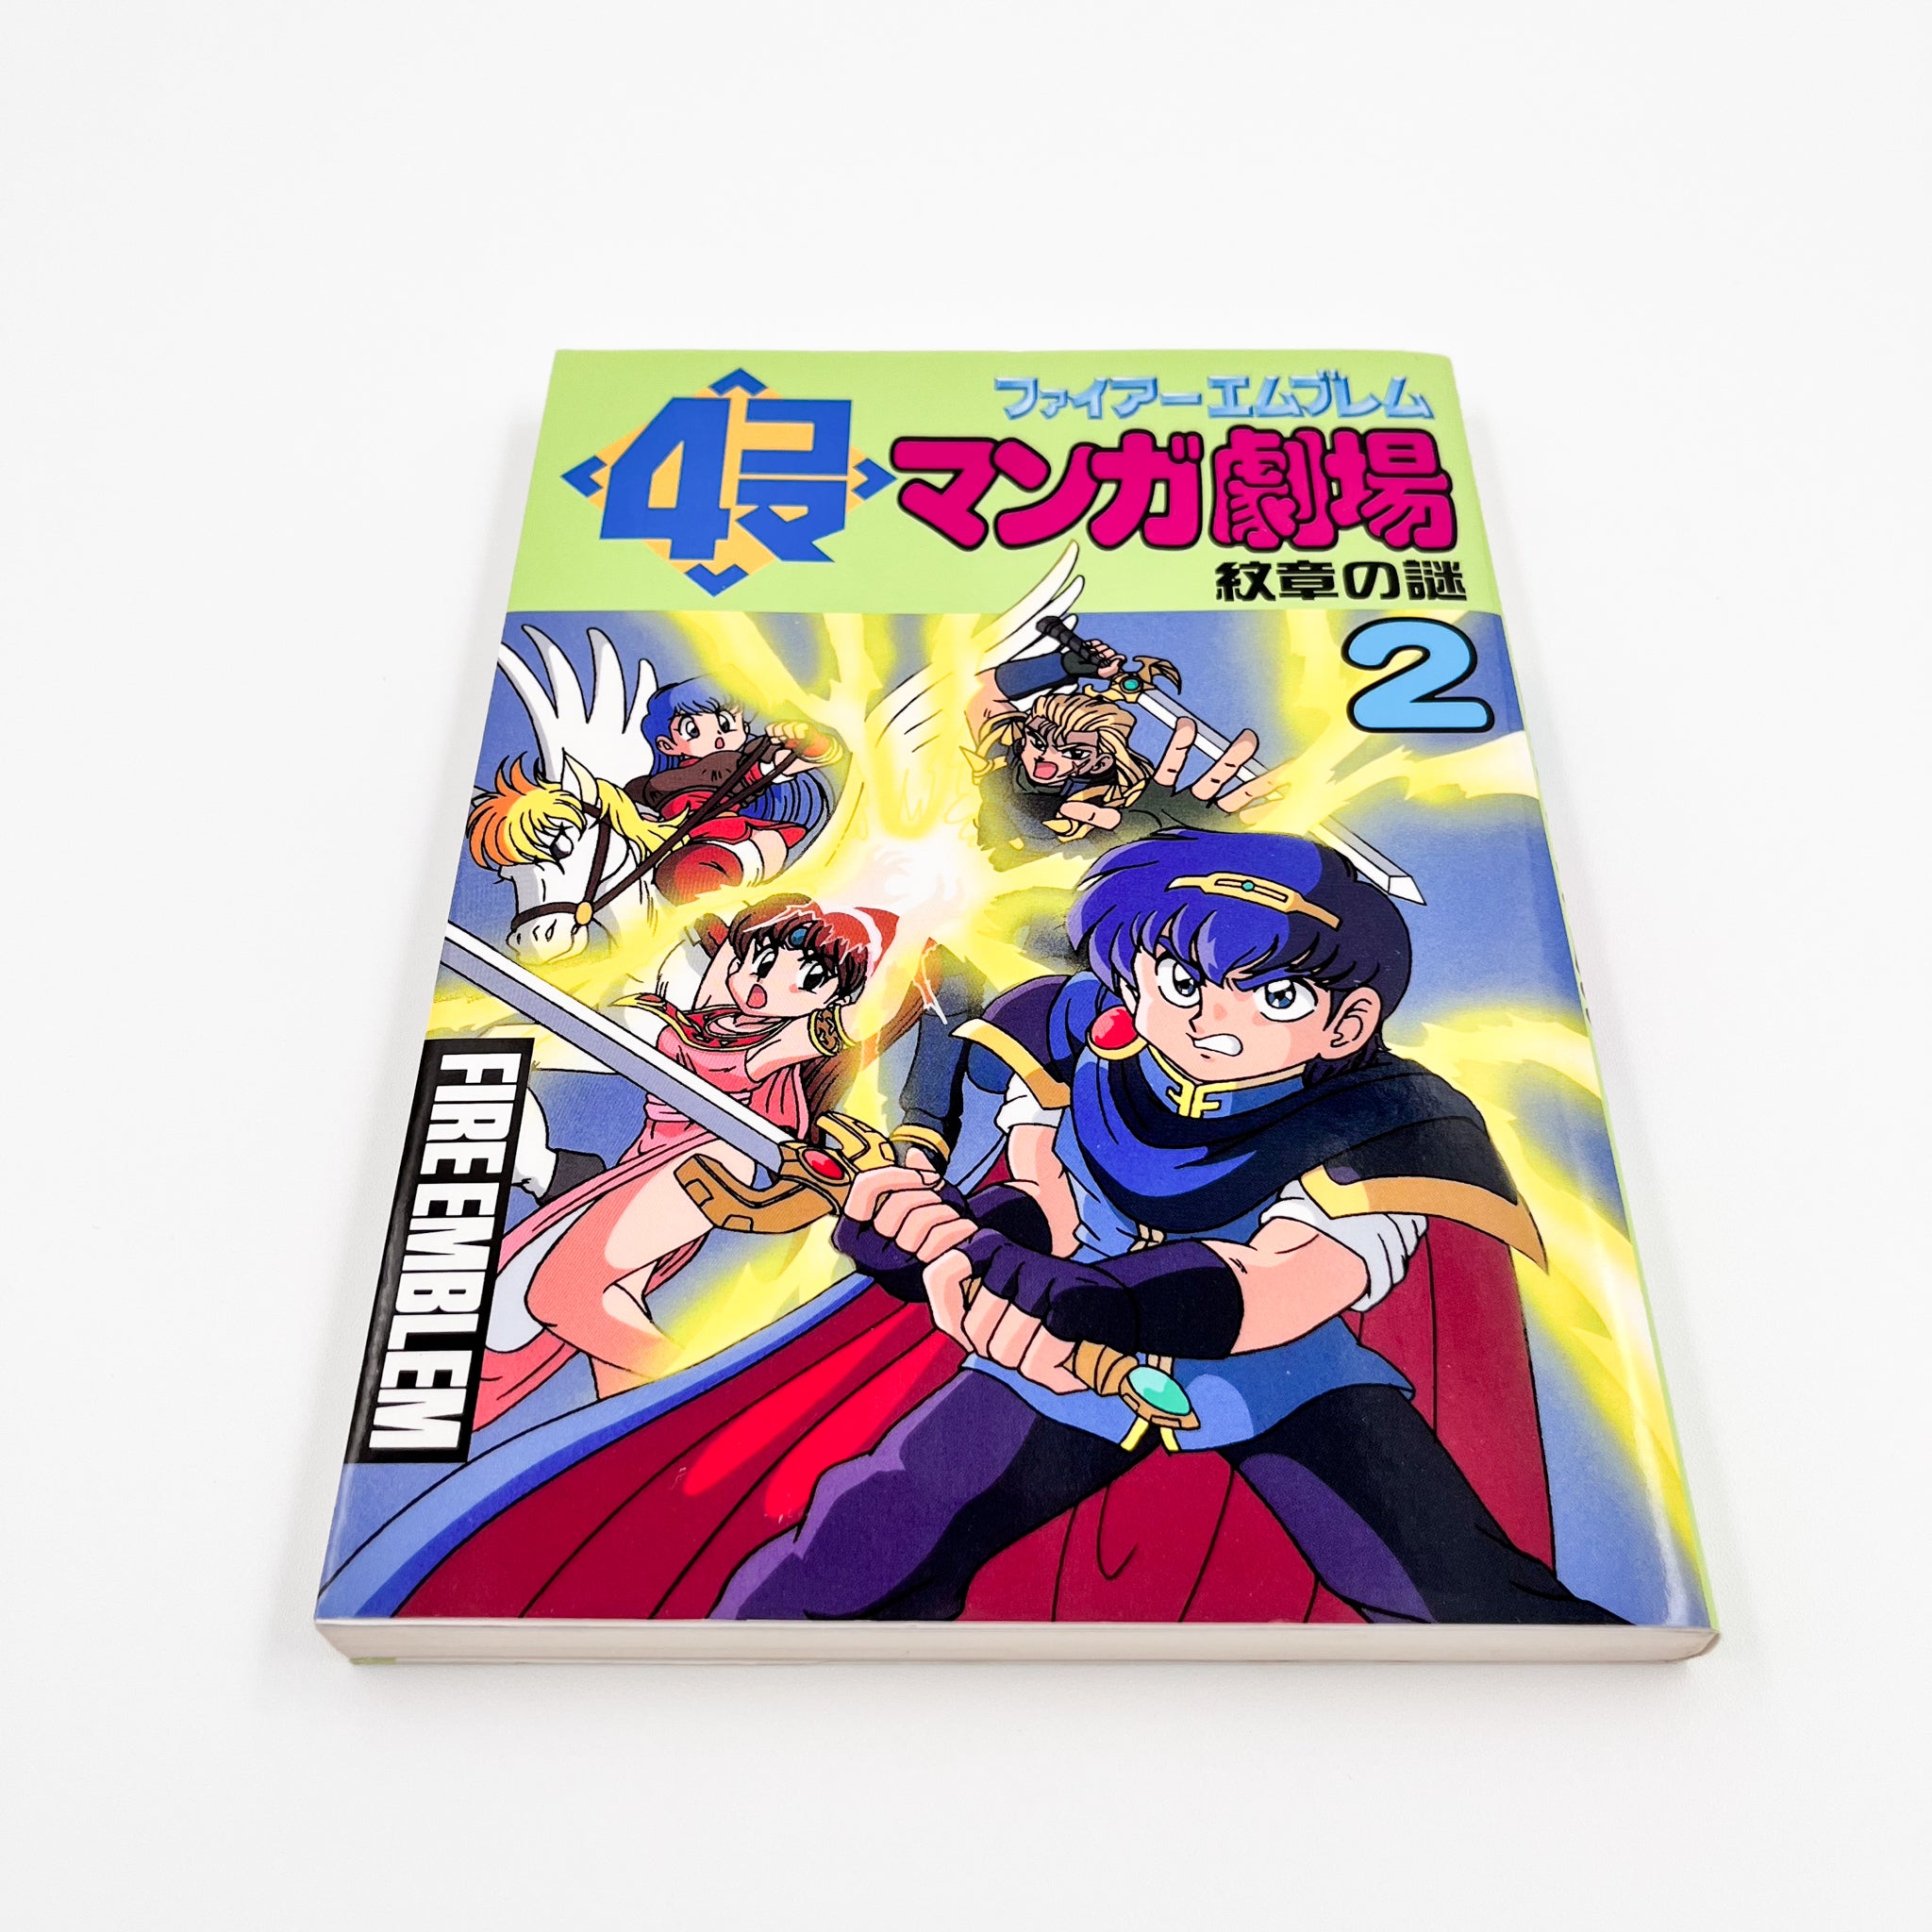 Fire Emblem 4koma Manga Theater Volume 2 Front